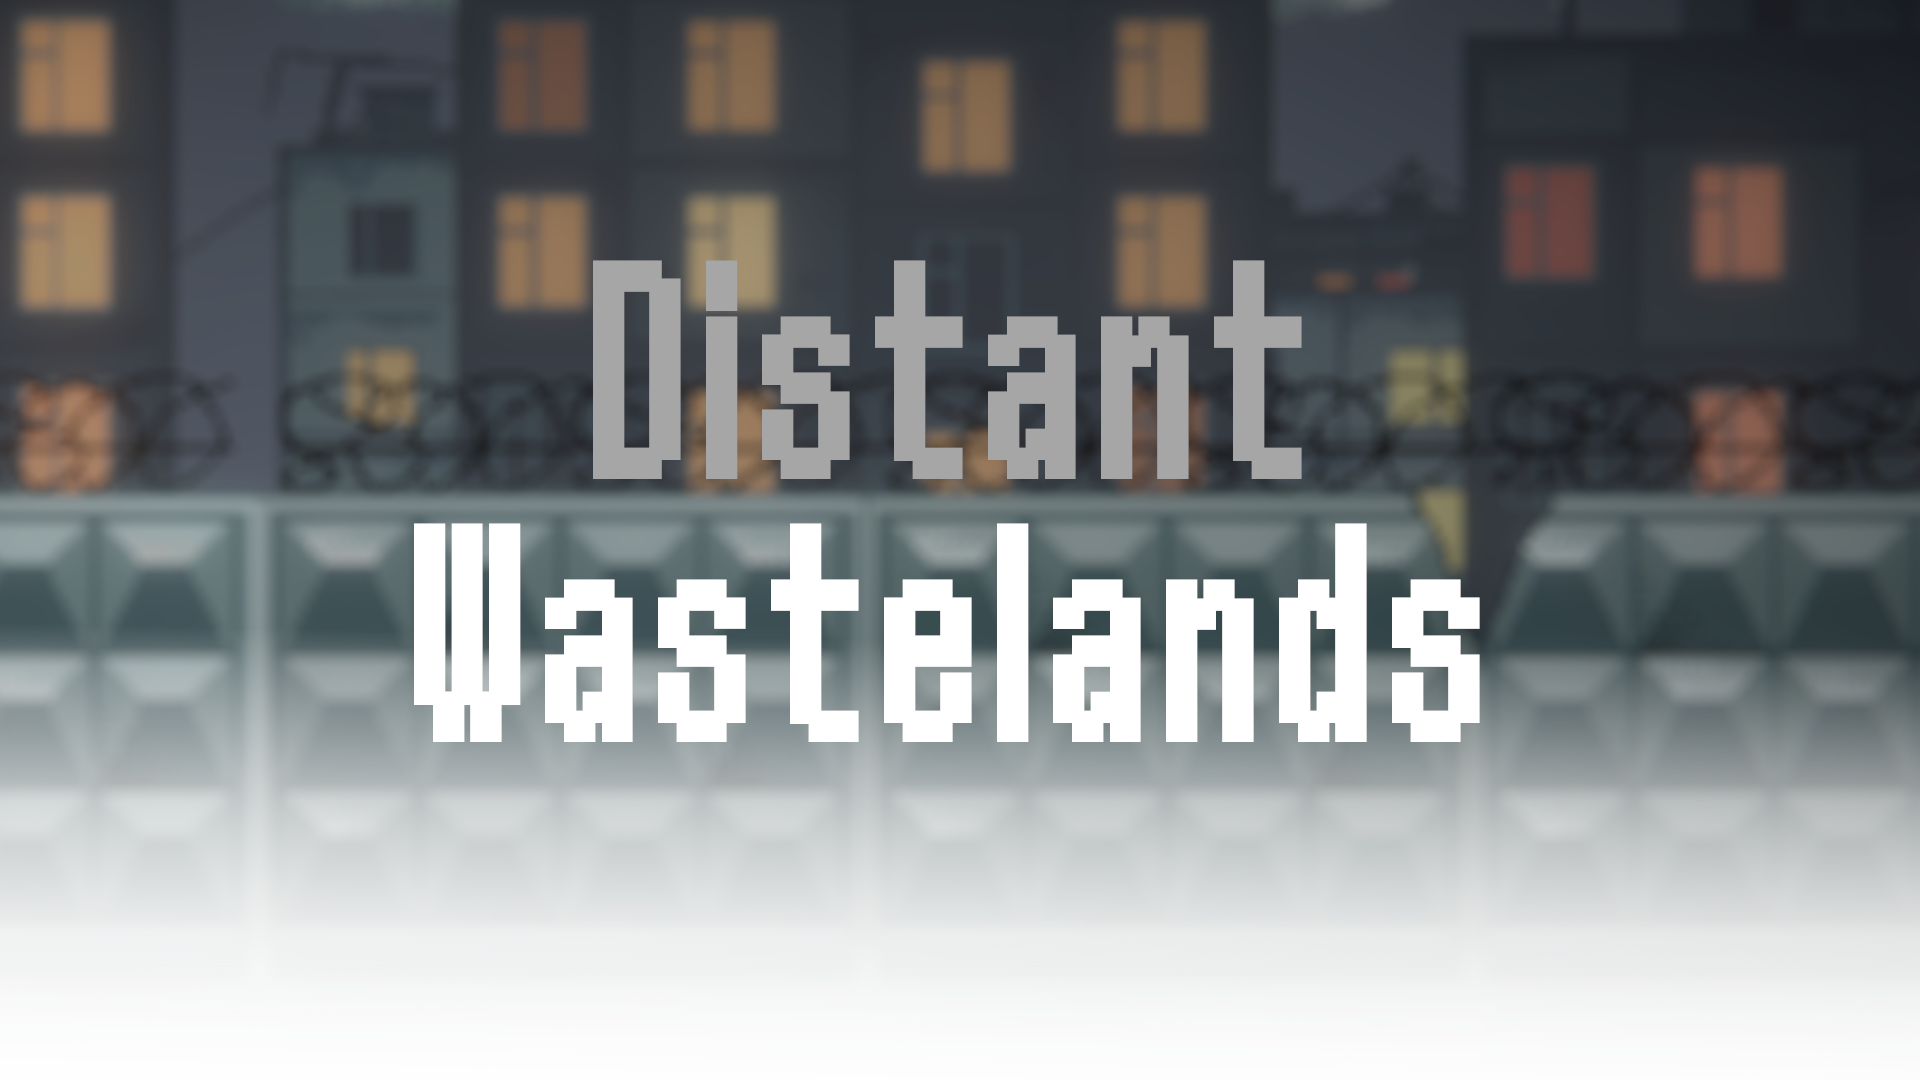 Distant Wastelands